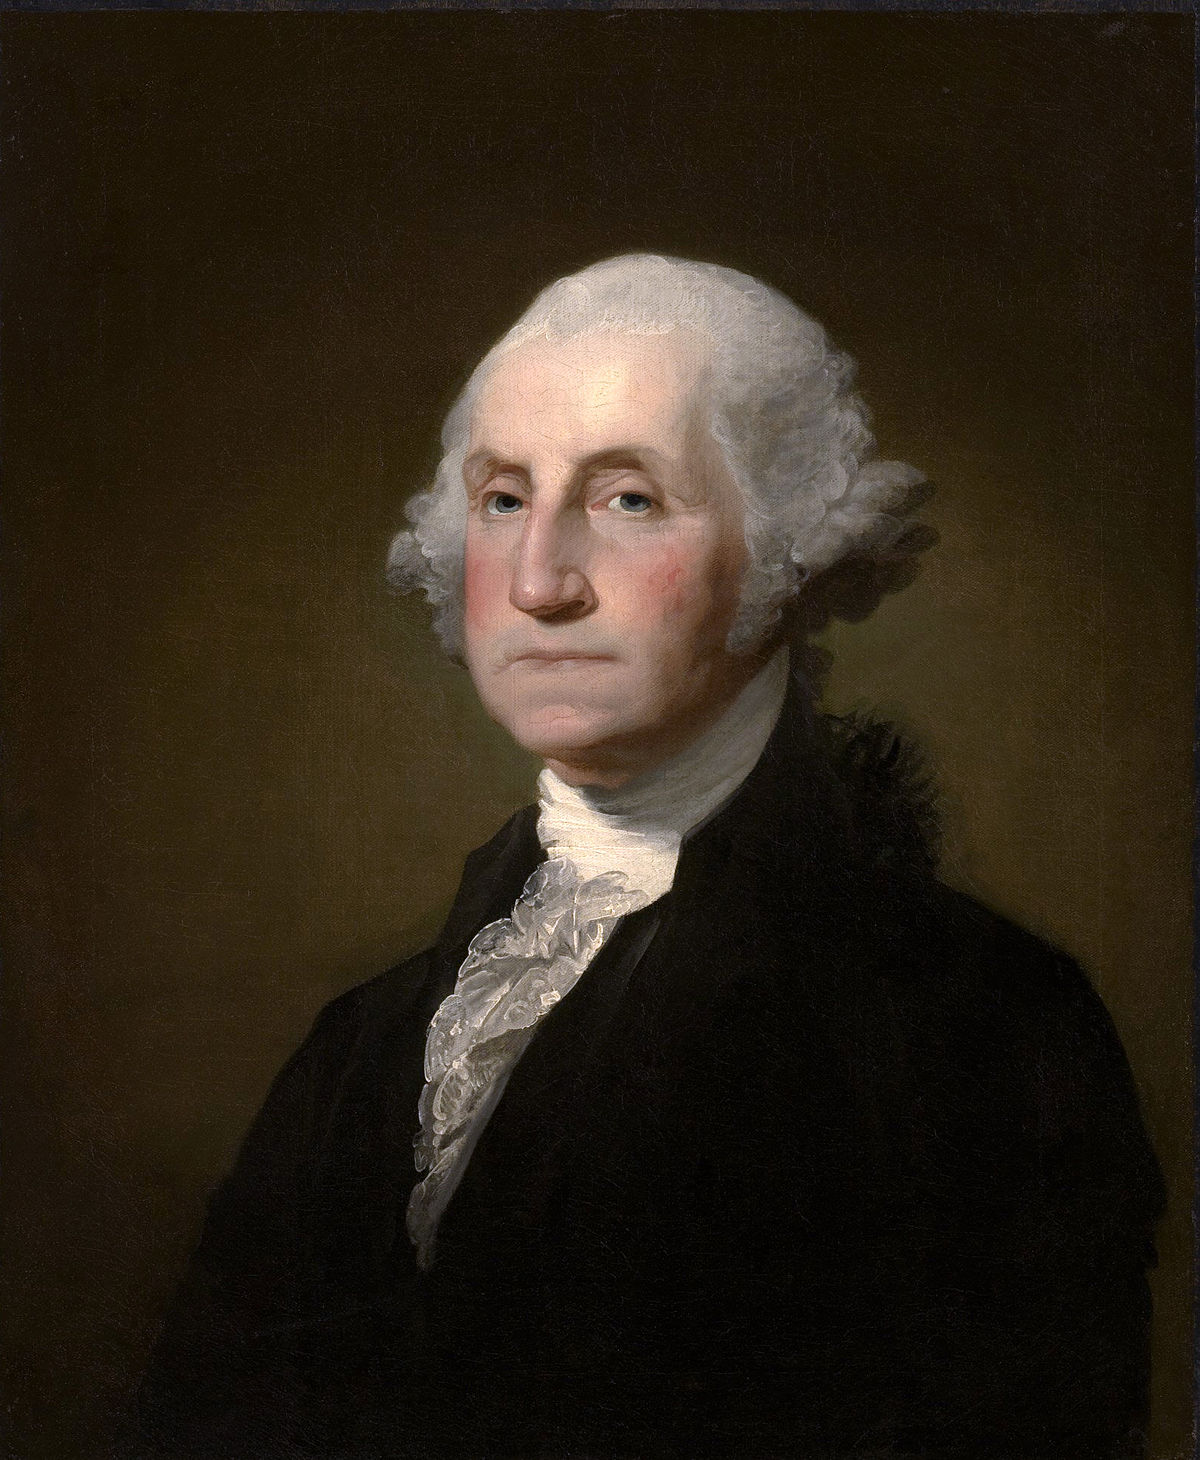 The portrait of George Washington